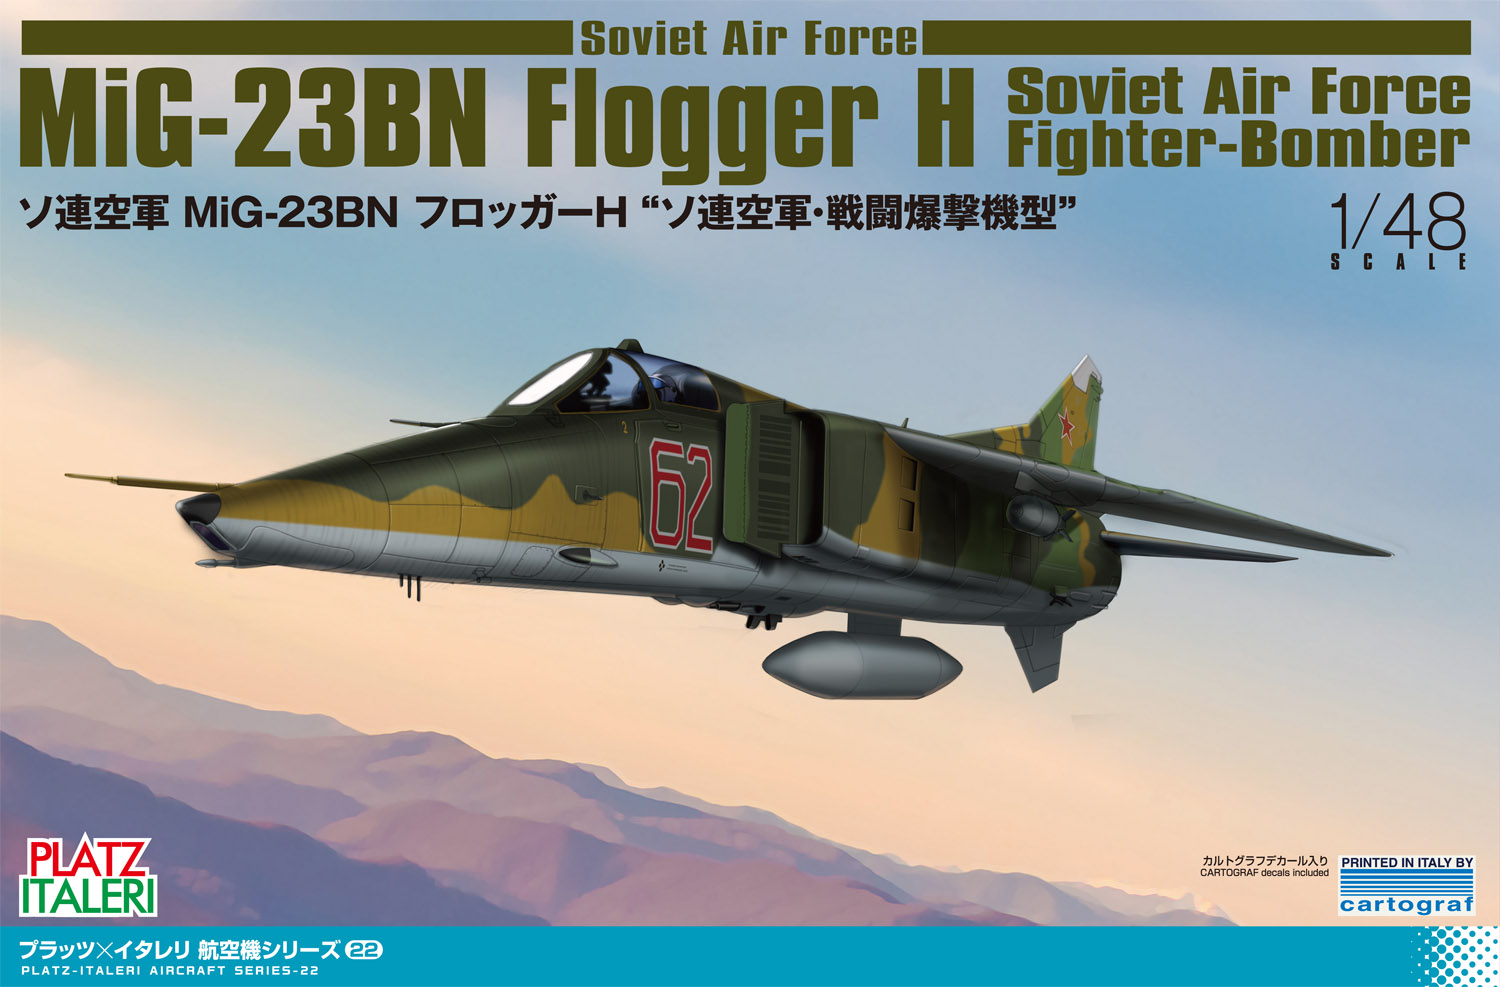 TPA-22 イタレリ 1/48 ソ連空軍 戦闘機 MiG-23BN フロッガーH ＇ソ連空軍/北朝鮮空軍＇